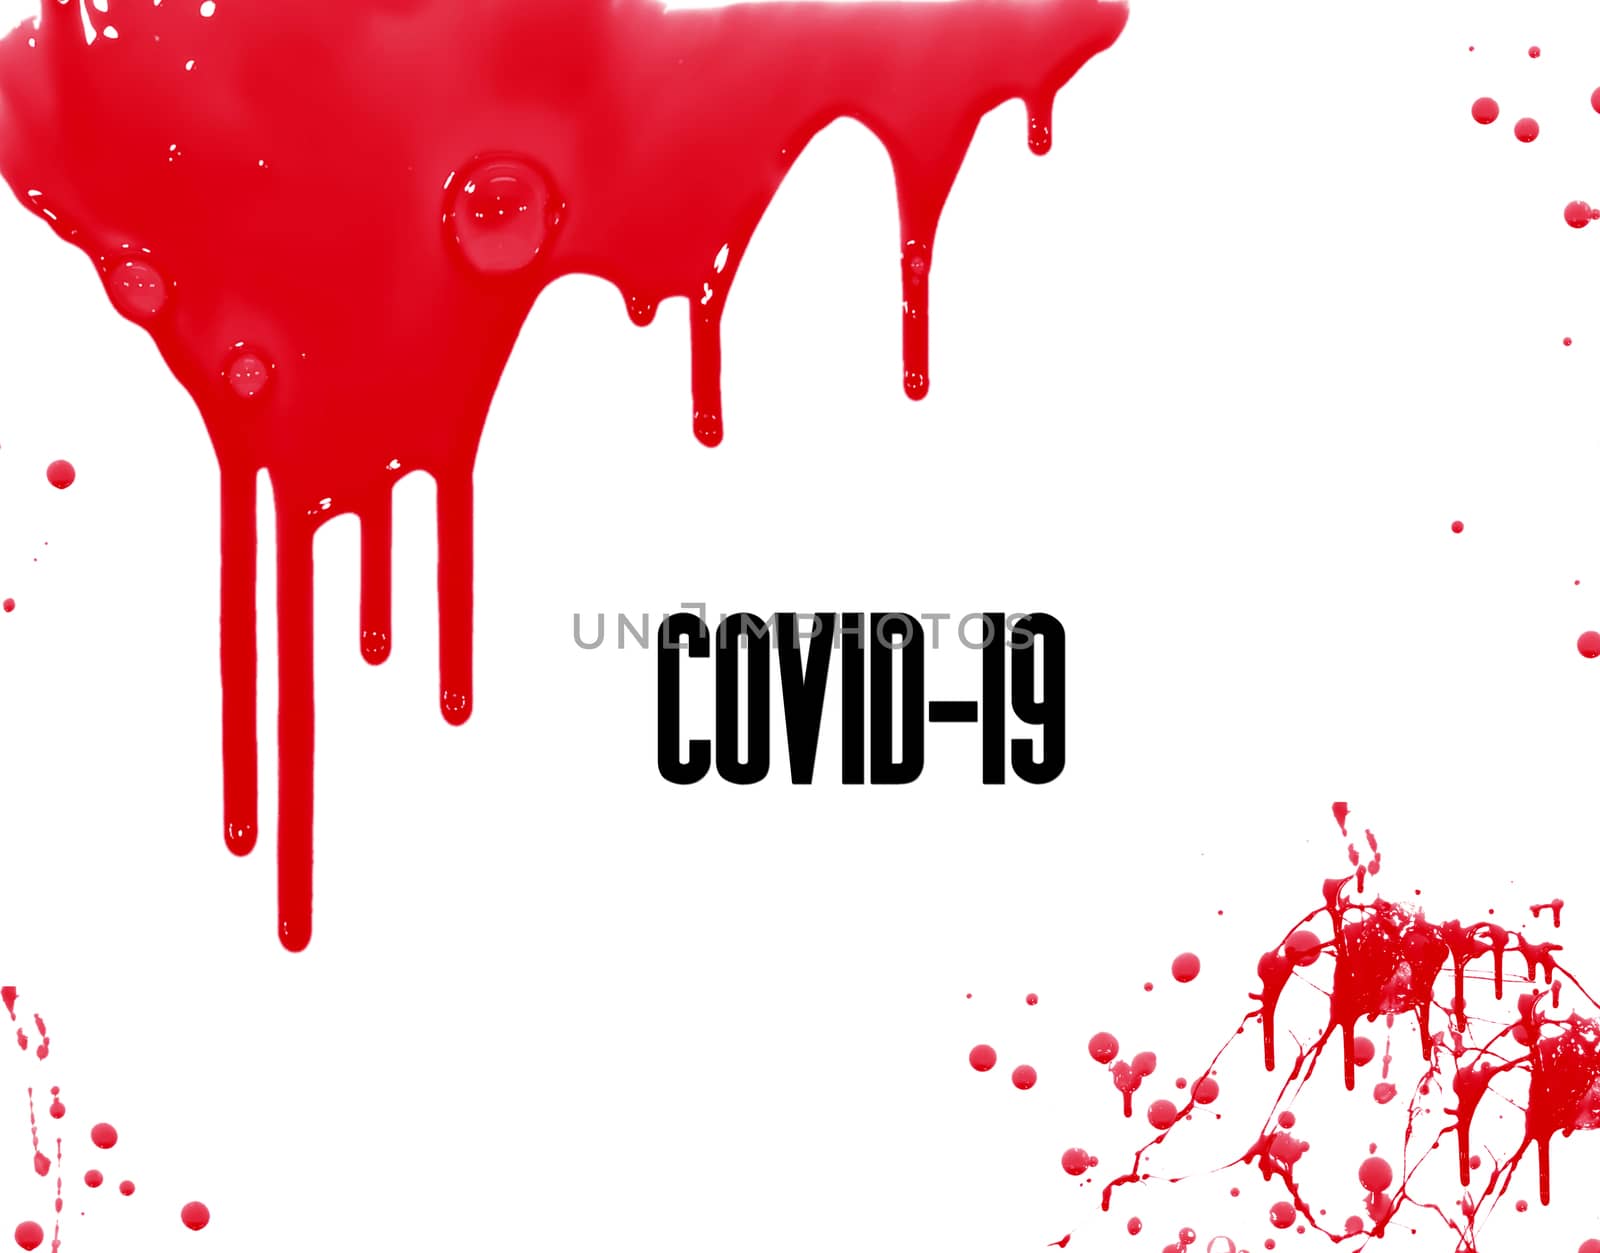 Blood background of coronavirus covid 19 by jengit